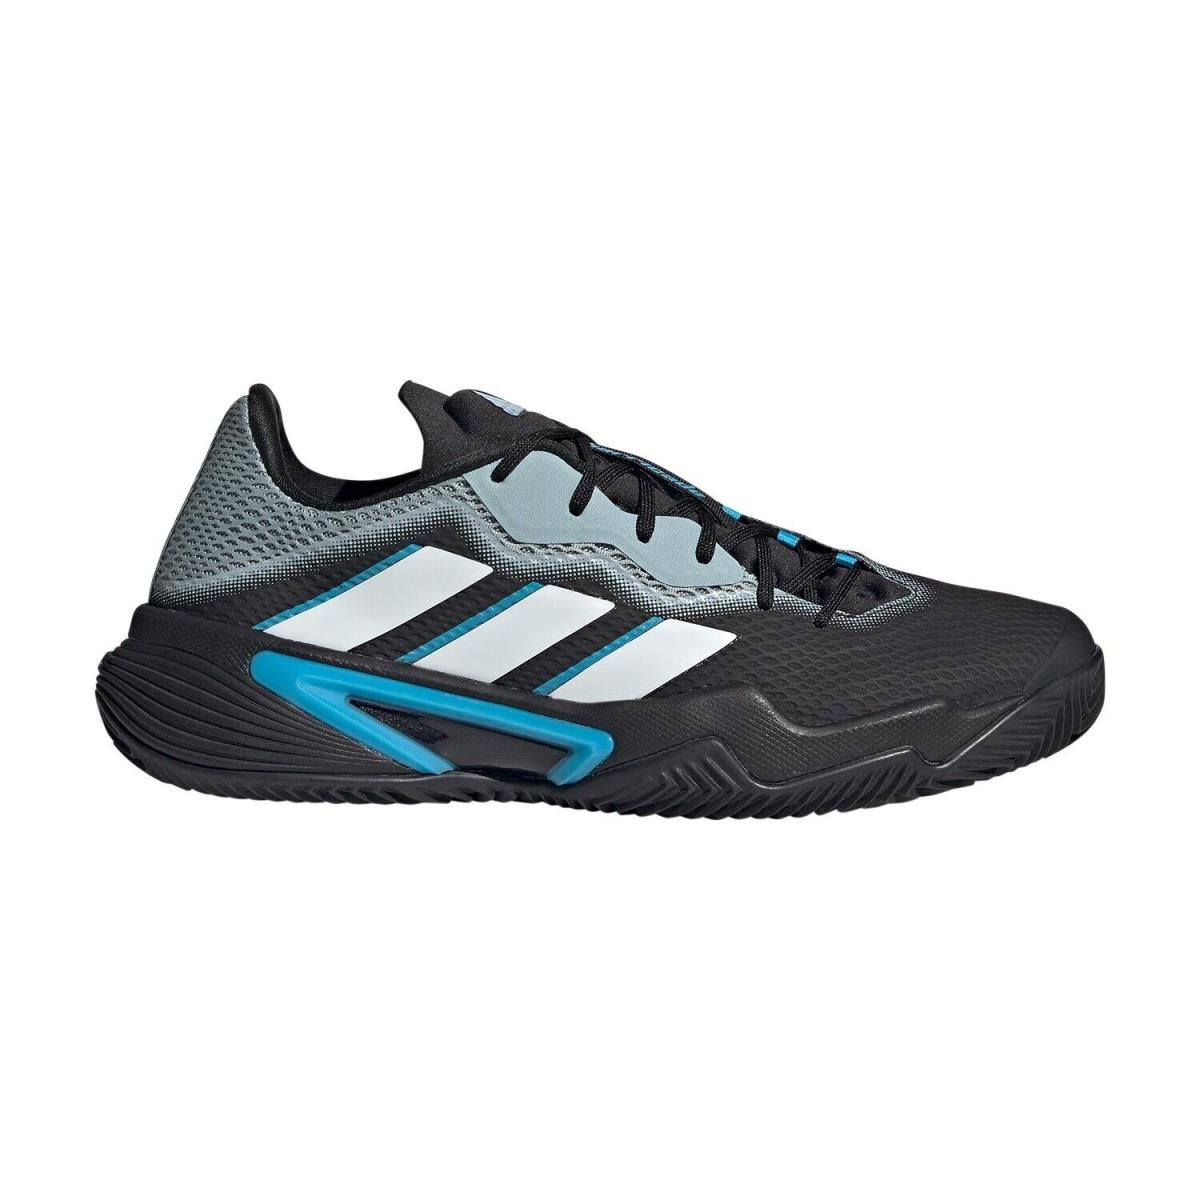 Men Adidas Barricade Clay Tennis Shoes Sneakers Size 10.5 Black Grey Blue H02047 - Black